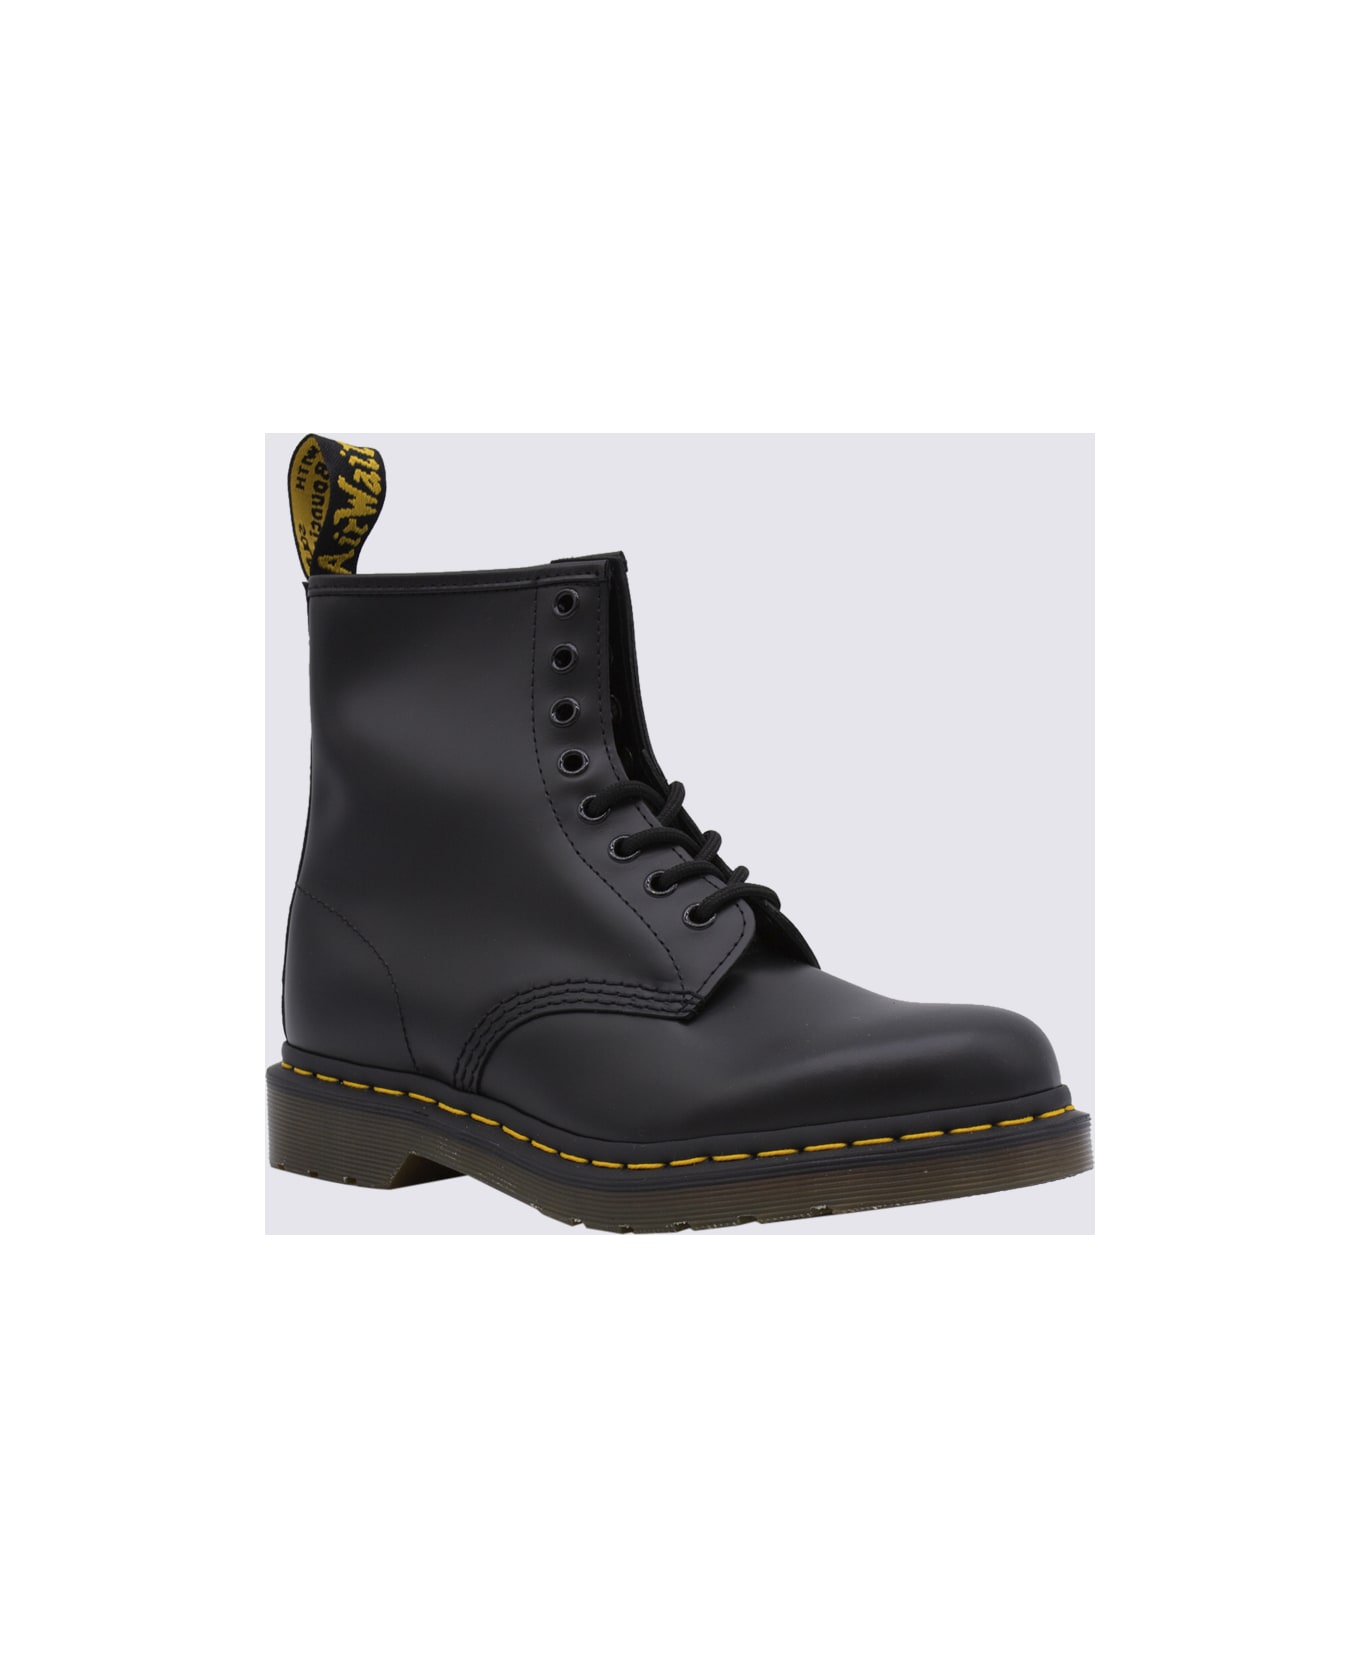 Dr. Martens Black 1460 Smooth Leather Boots - Black name:458